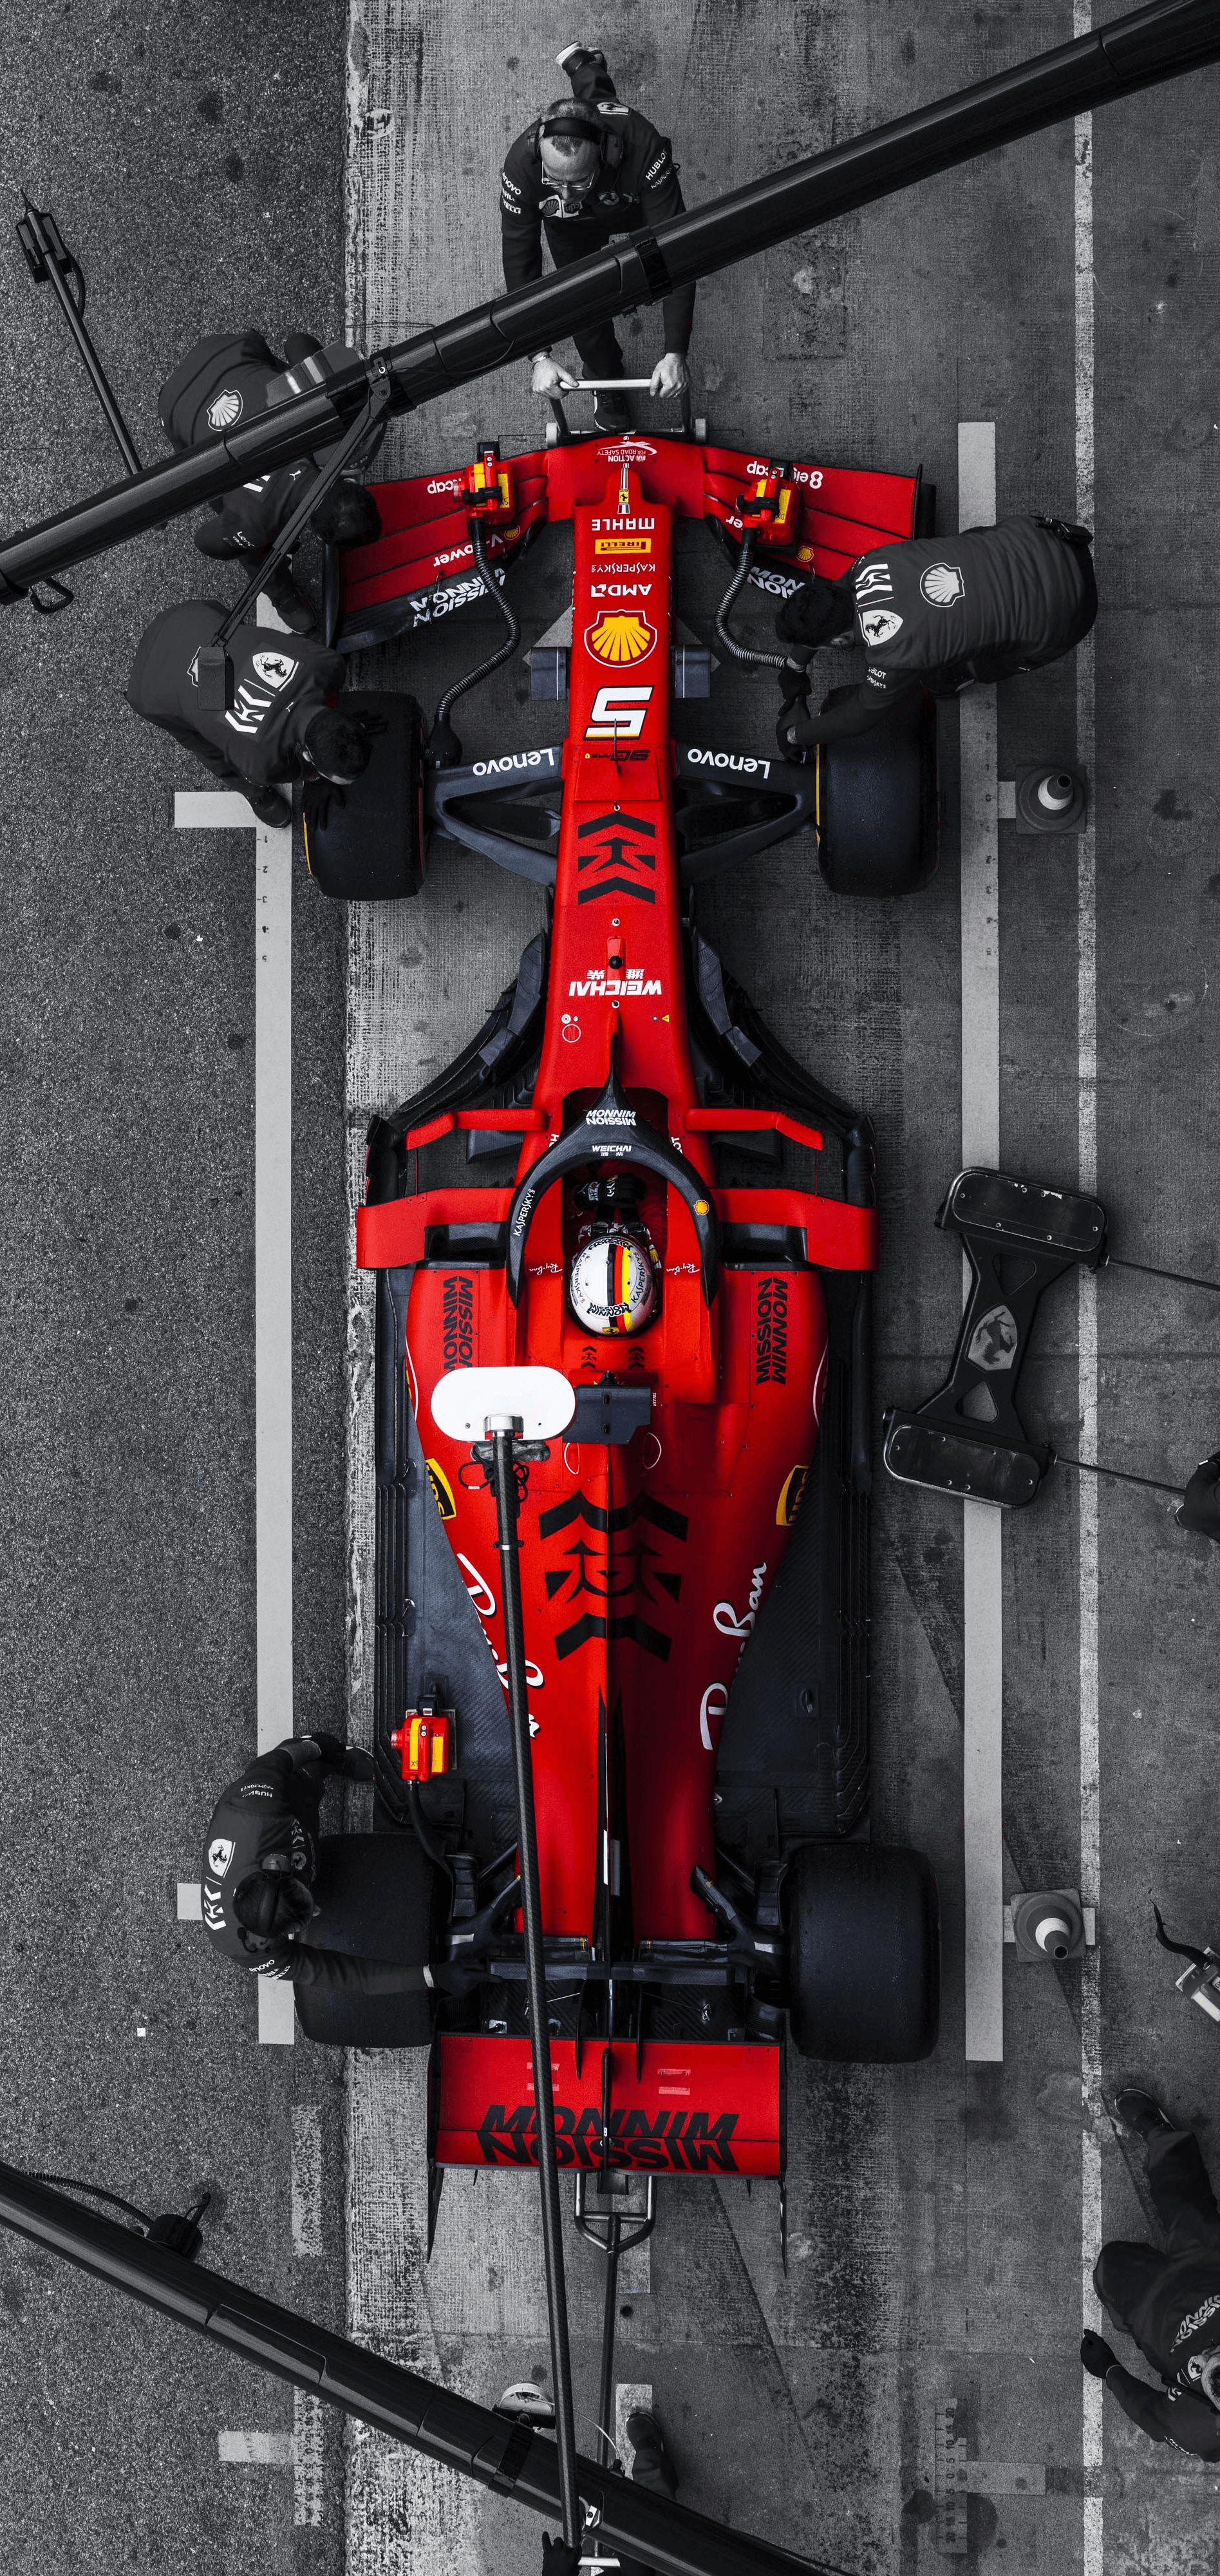 Sebastian Vettel's SF90 in the Pits [Mobile Wallpaper]